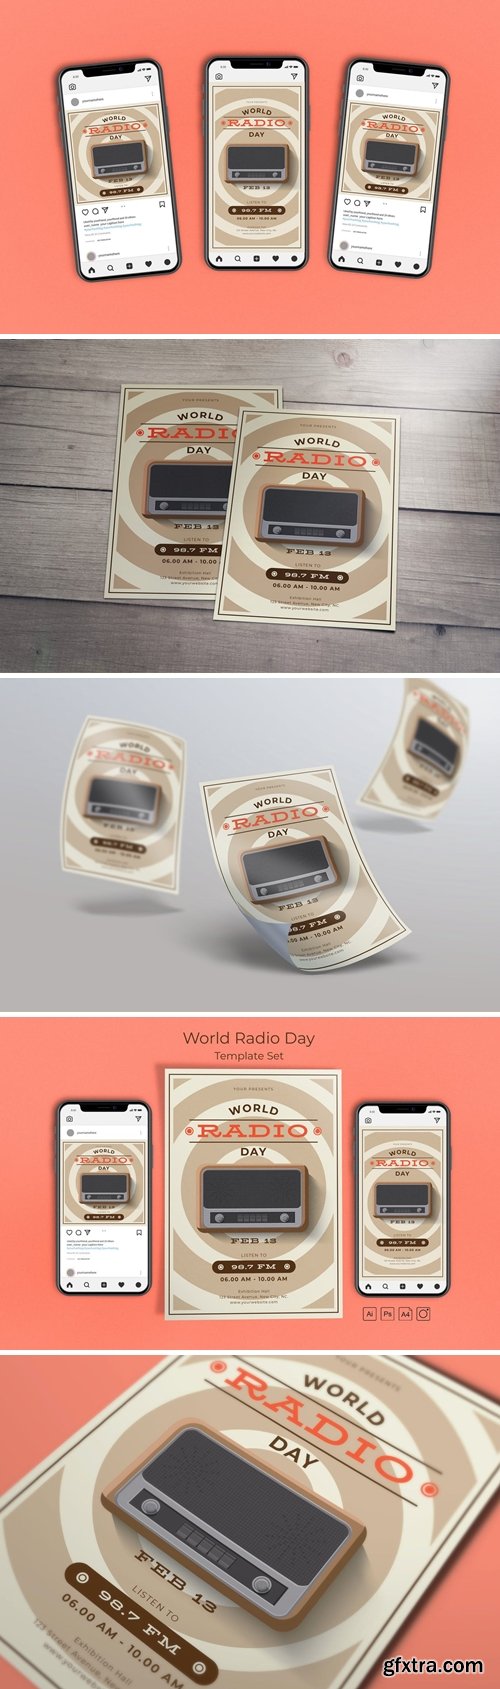 World Radio Day Template Set